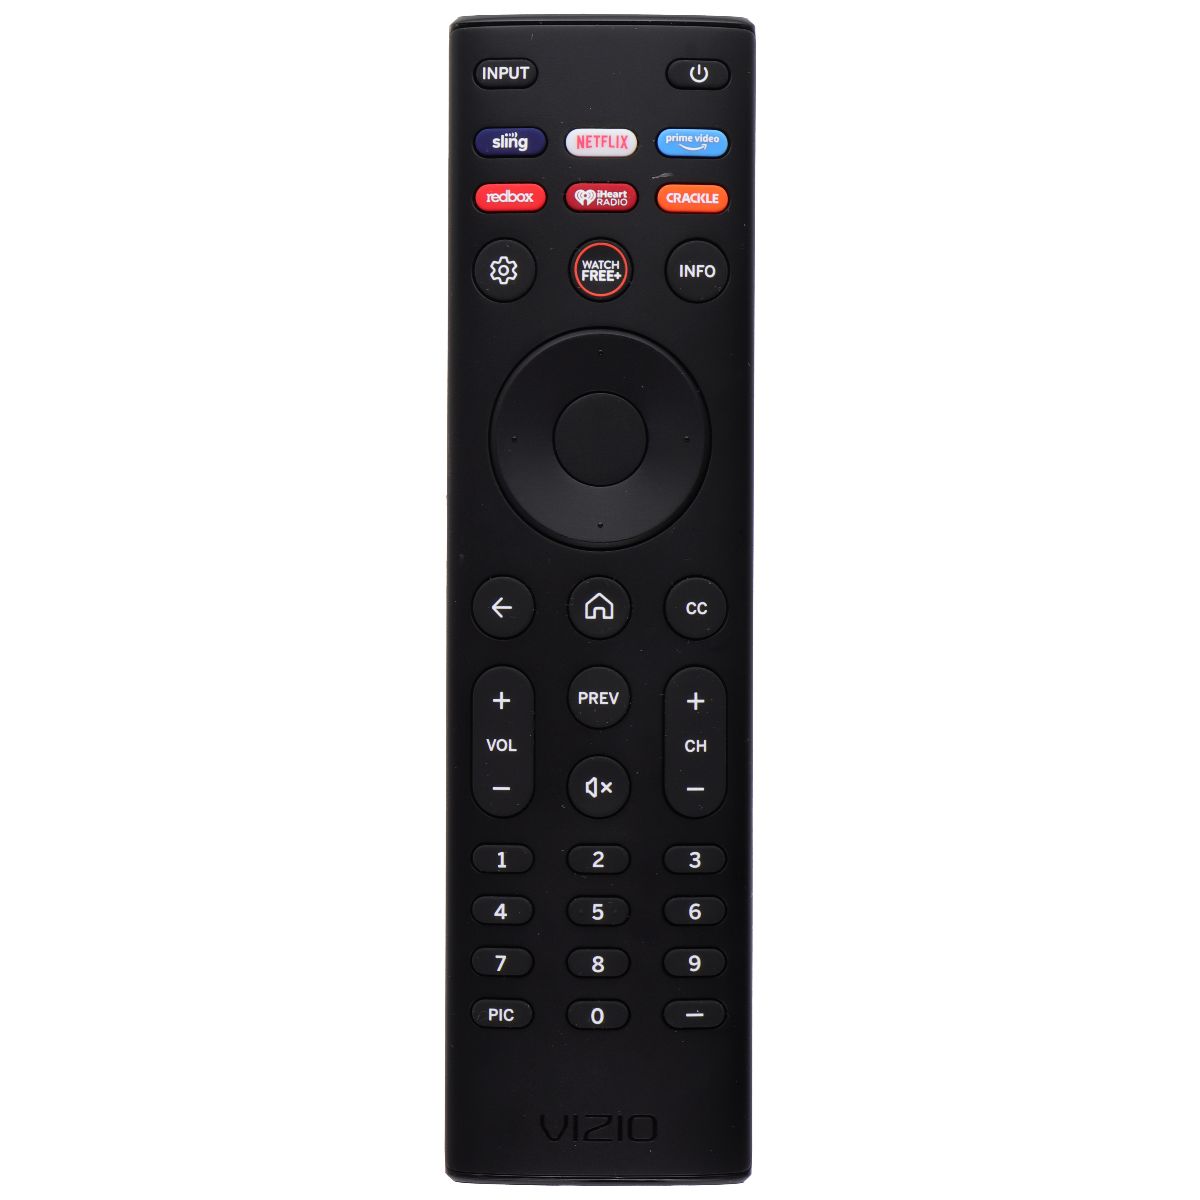 VIZIO SmartCast TV Remote with HBO Max/Netflix/Prime Keys - Black (XRT140V6) TV, Video & Audio Accessories - Remote Controls Vizio    - Simple Cell Bulk Wholesale Pricing - USA Seller